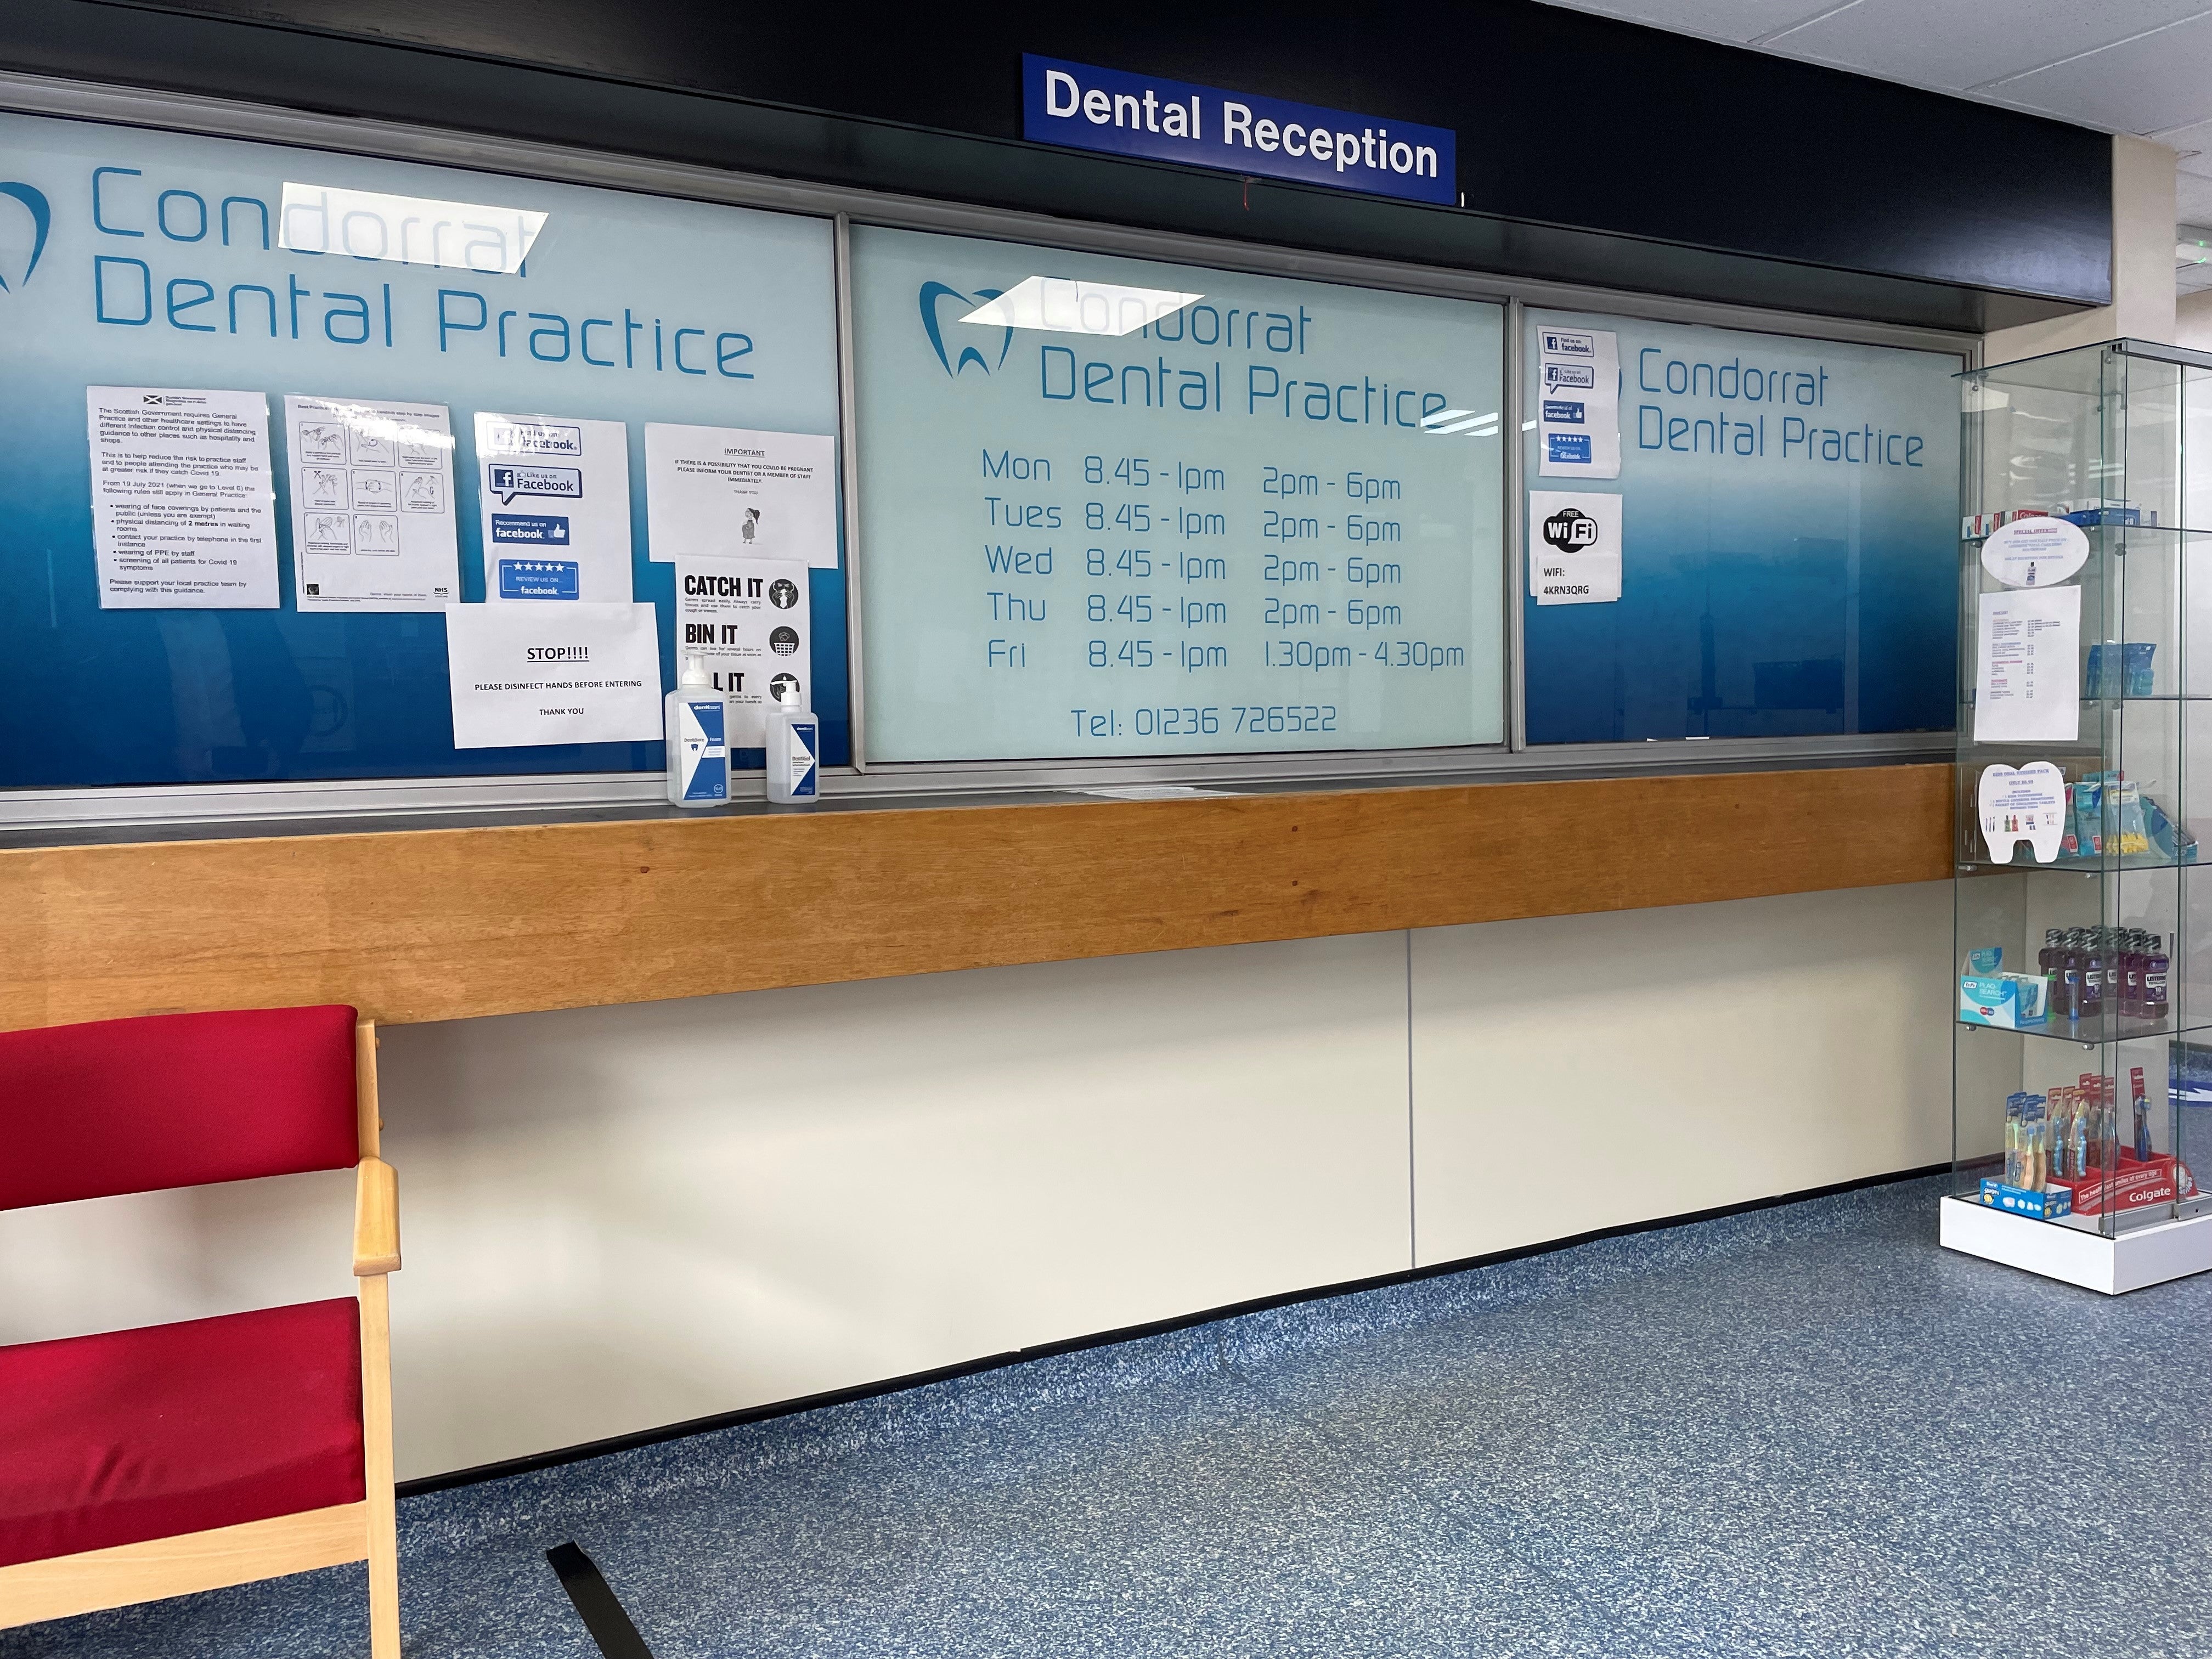 Condorrat Dental Practice in North Lanarkshire